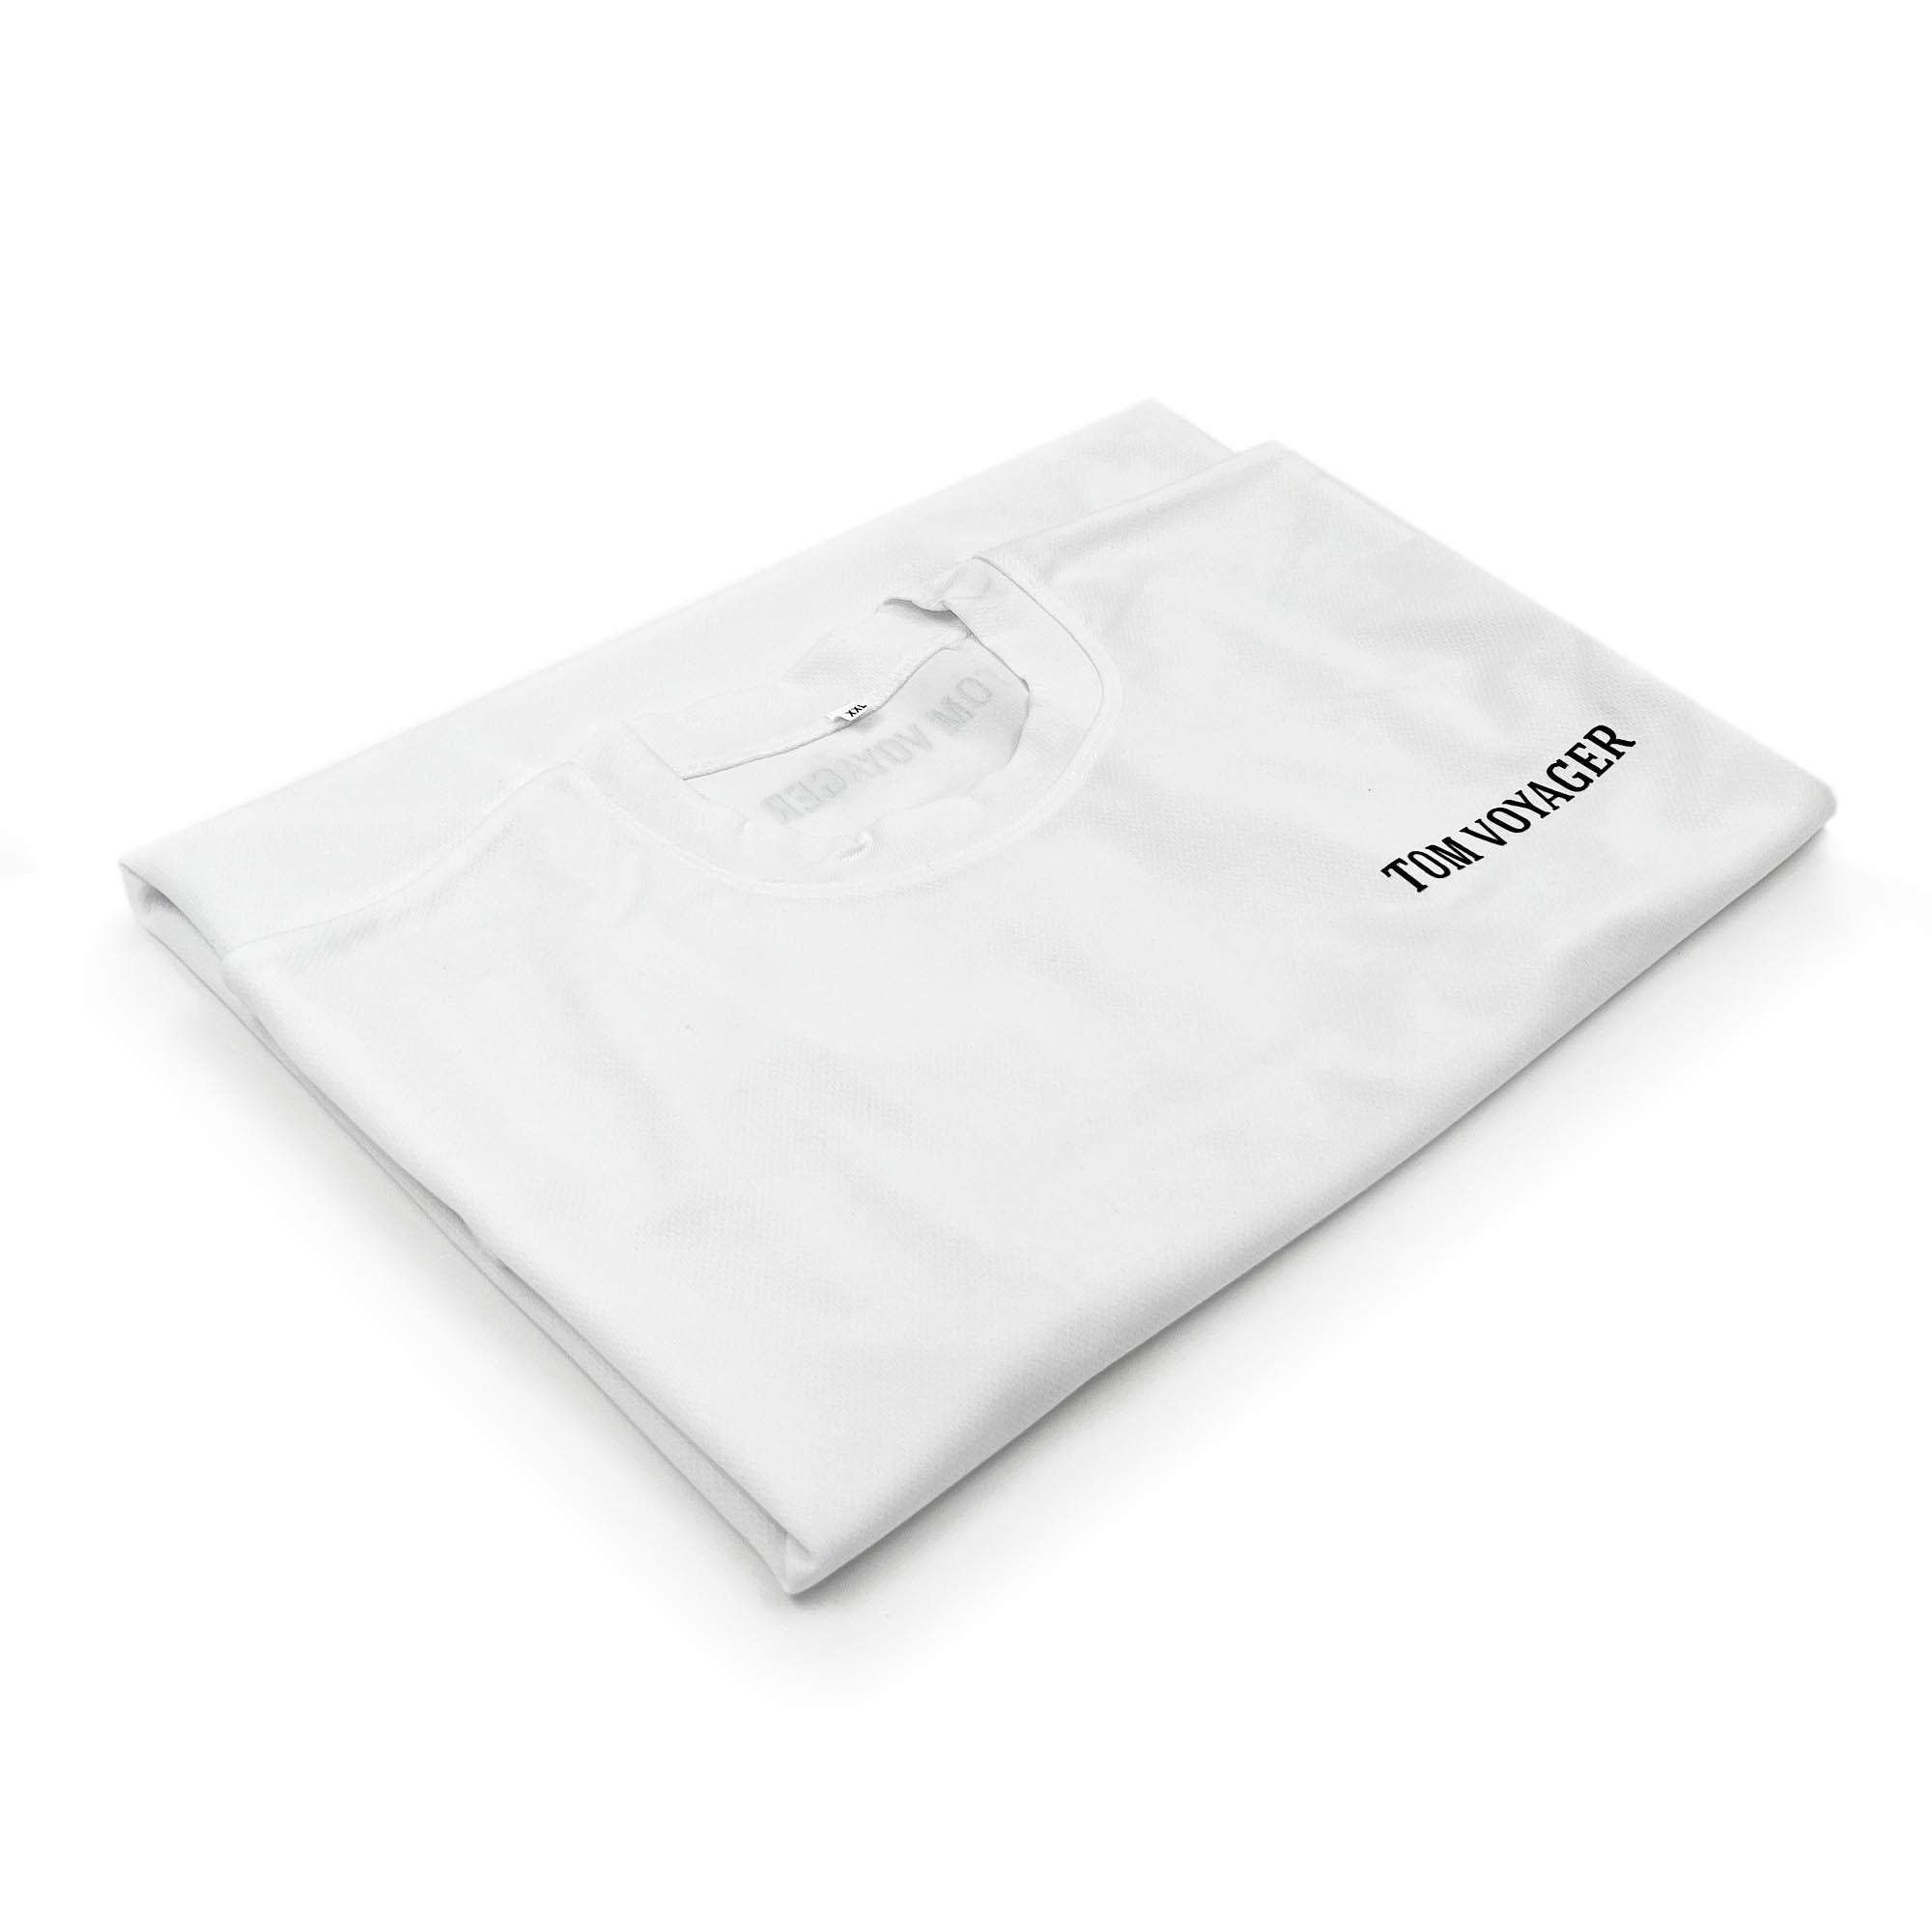 Velocity White sports shirt